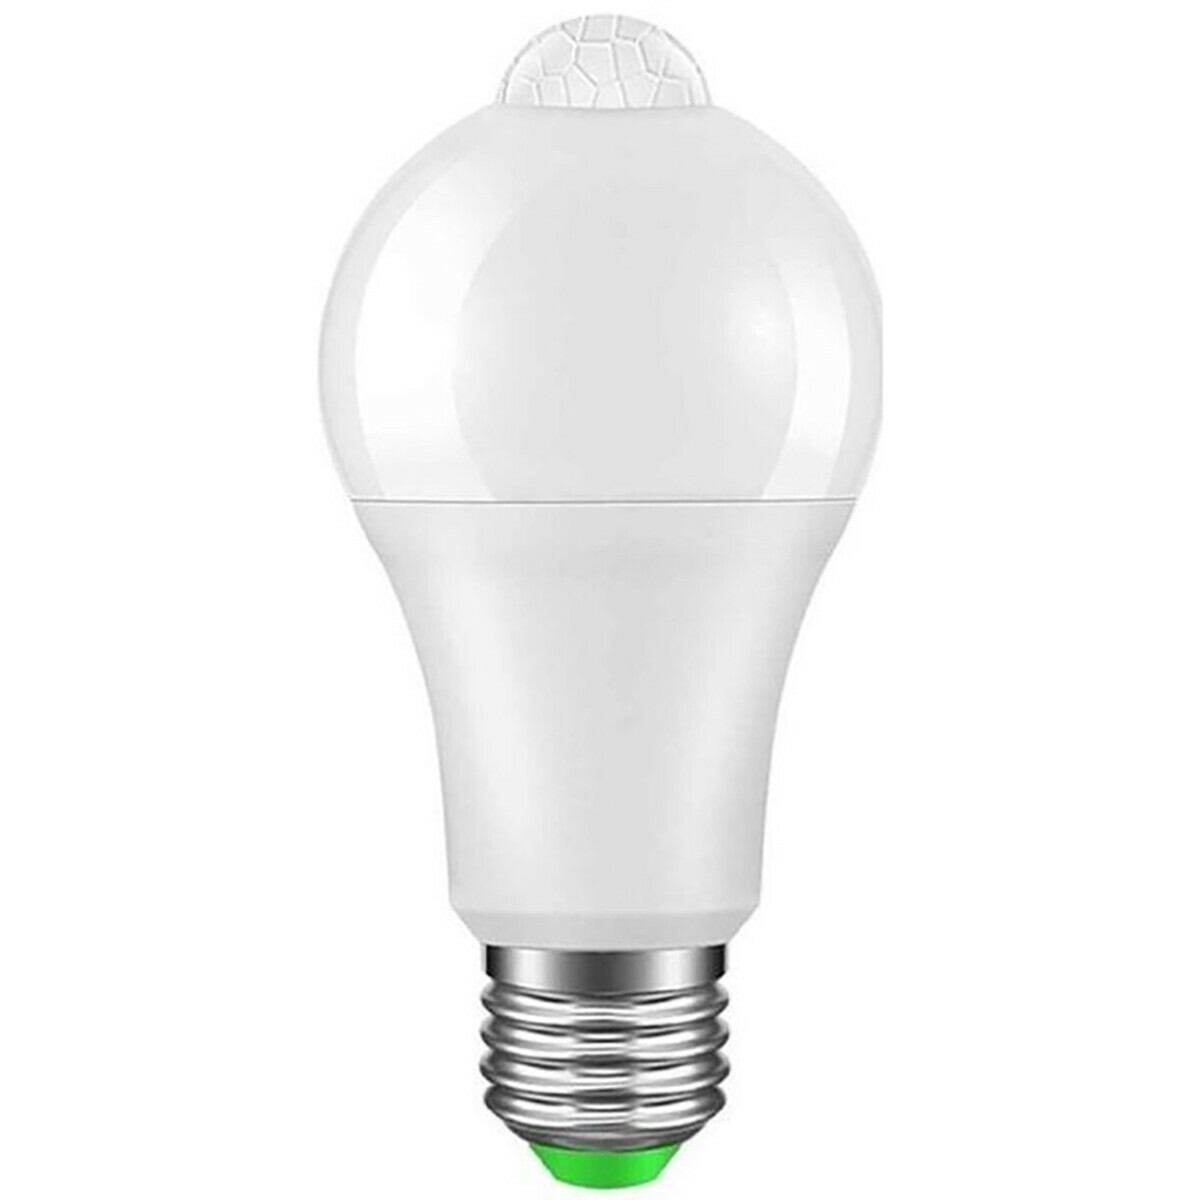 Doelwit Toepassen filosoof LED Lamp met Bewegingssensor - Aigi Linido - A60 - E27 Fitting - 6W -  Helder/Koud Wit 6500K | BES LED